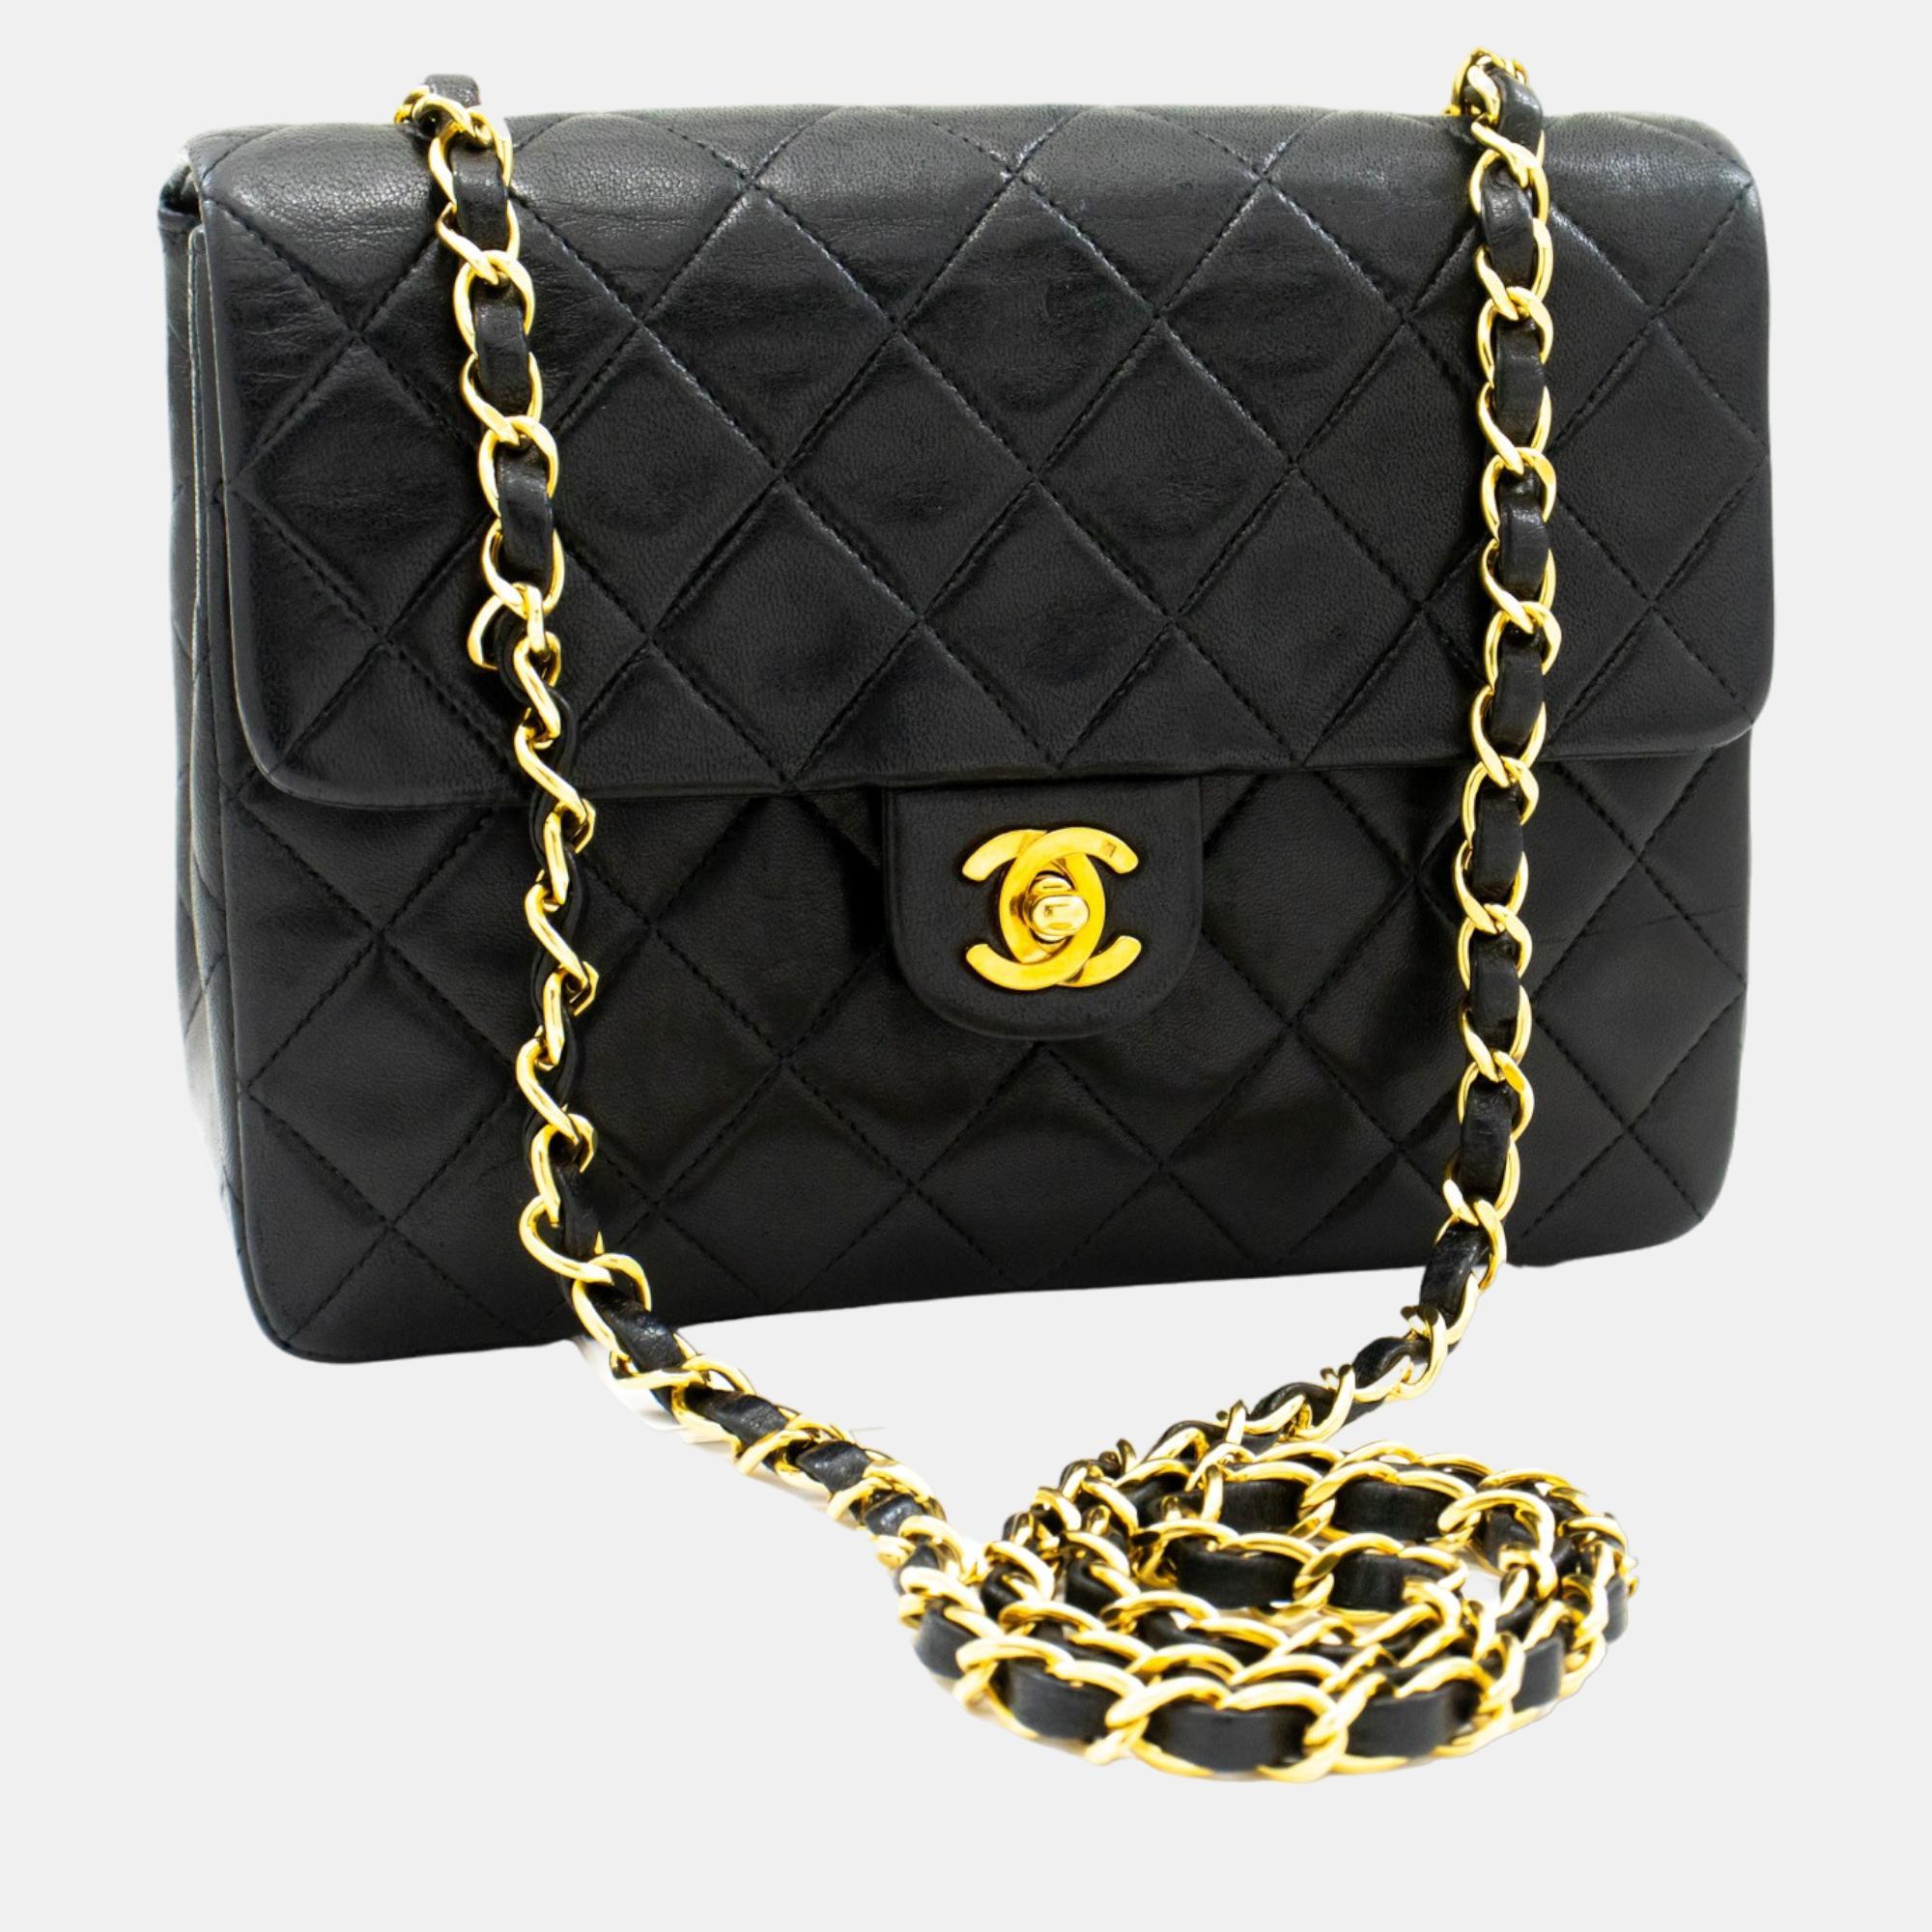 Chanel Black Leather Small Vintage Classic Double Flap Shoulder Bag